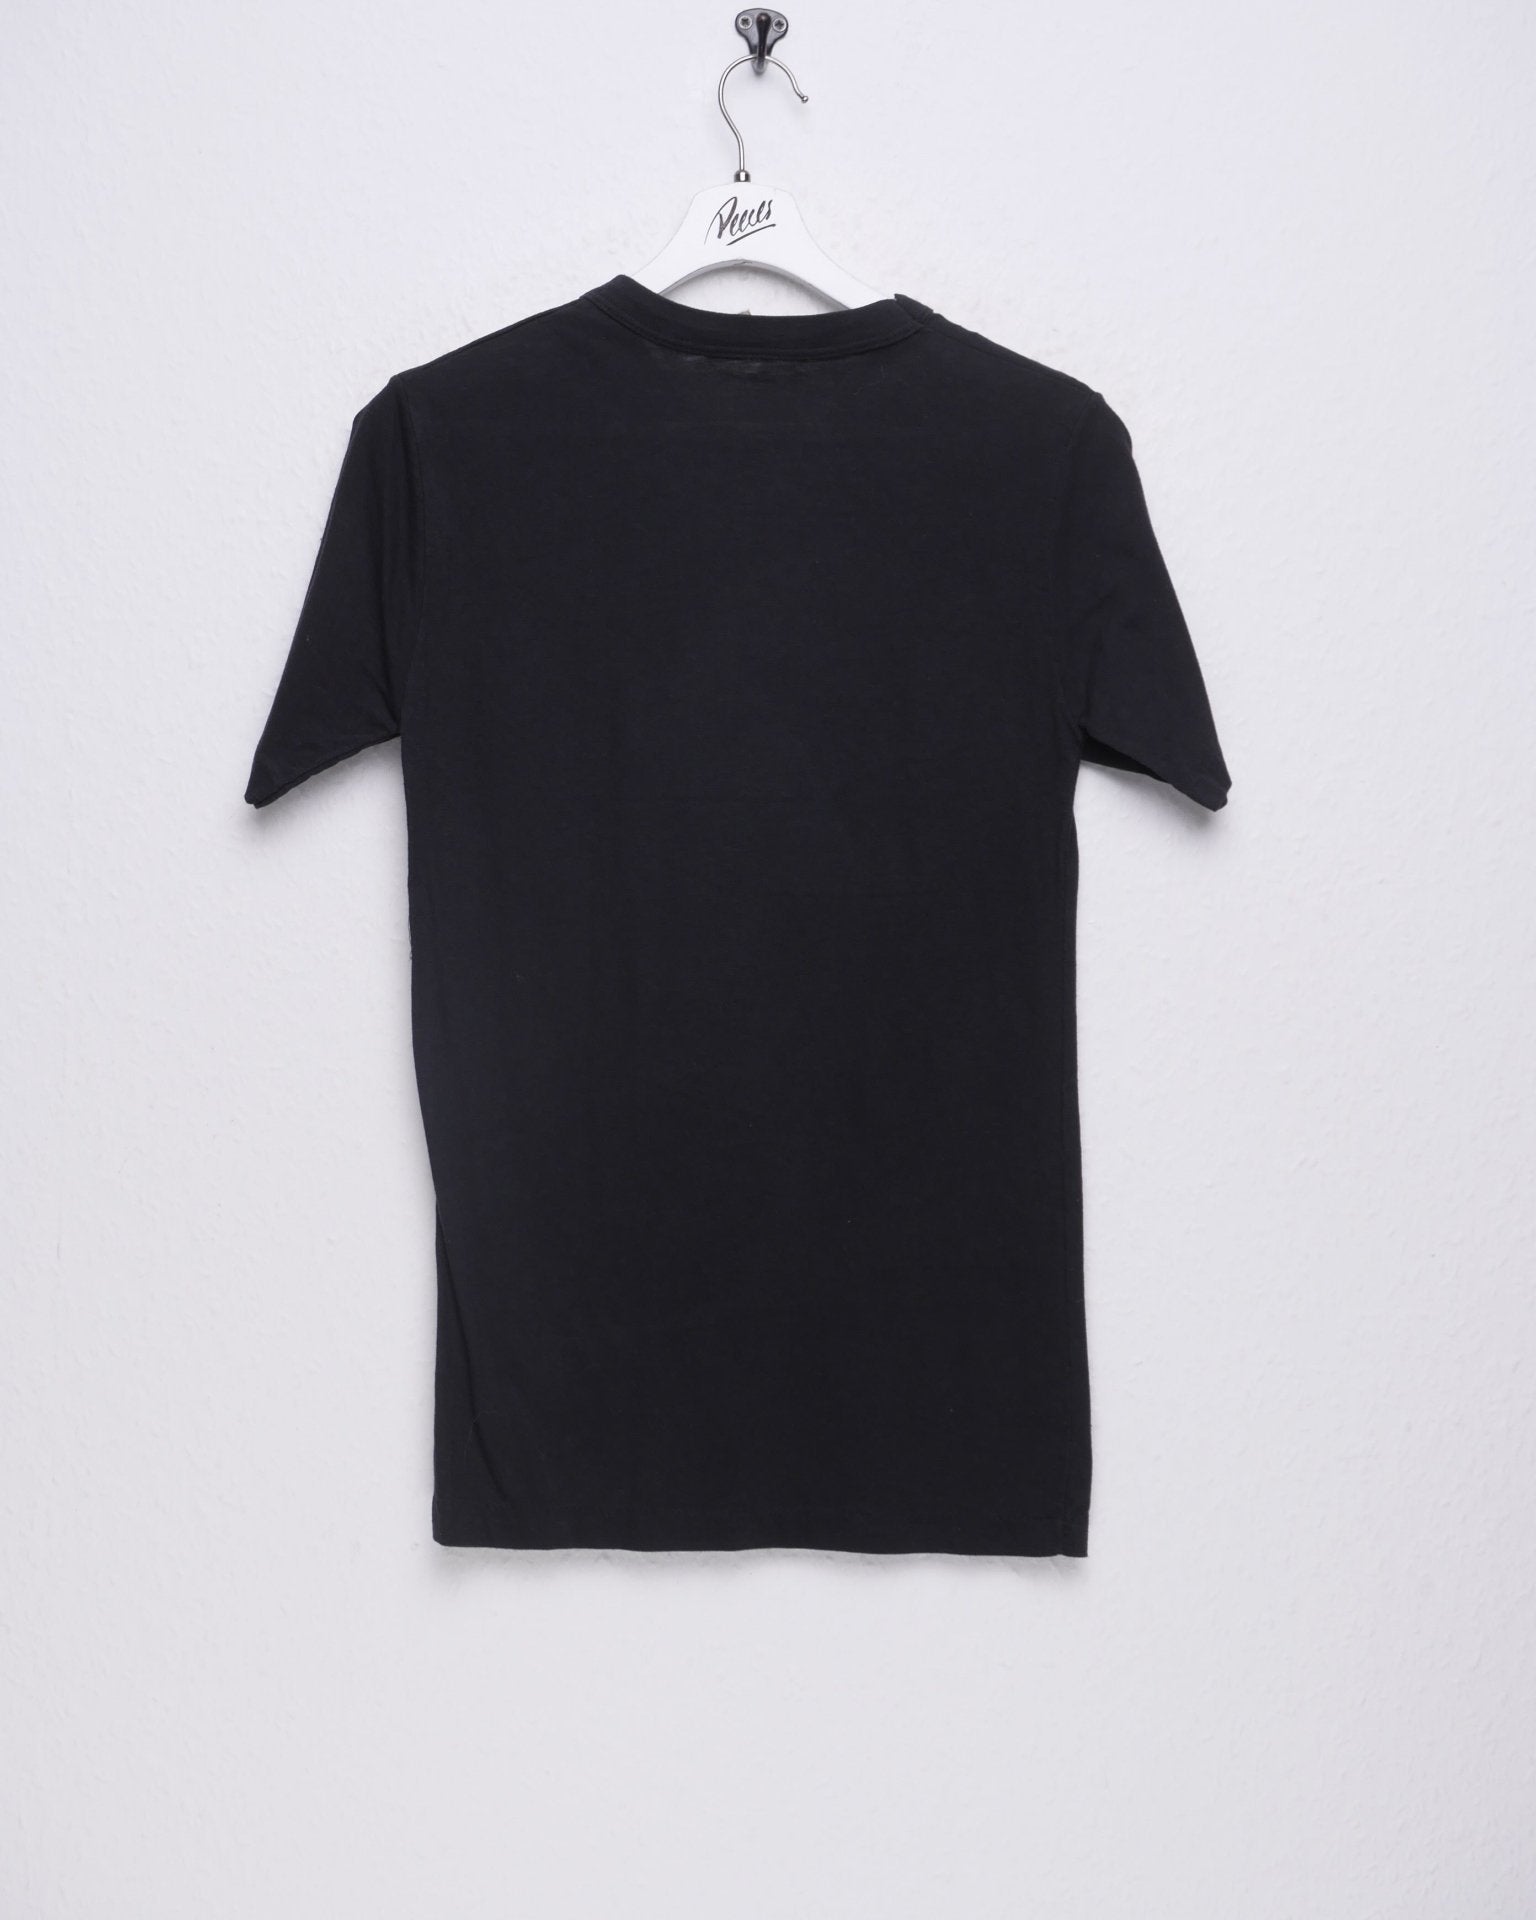 Dash printed Graphic Vintage black Shirt - Peeces